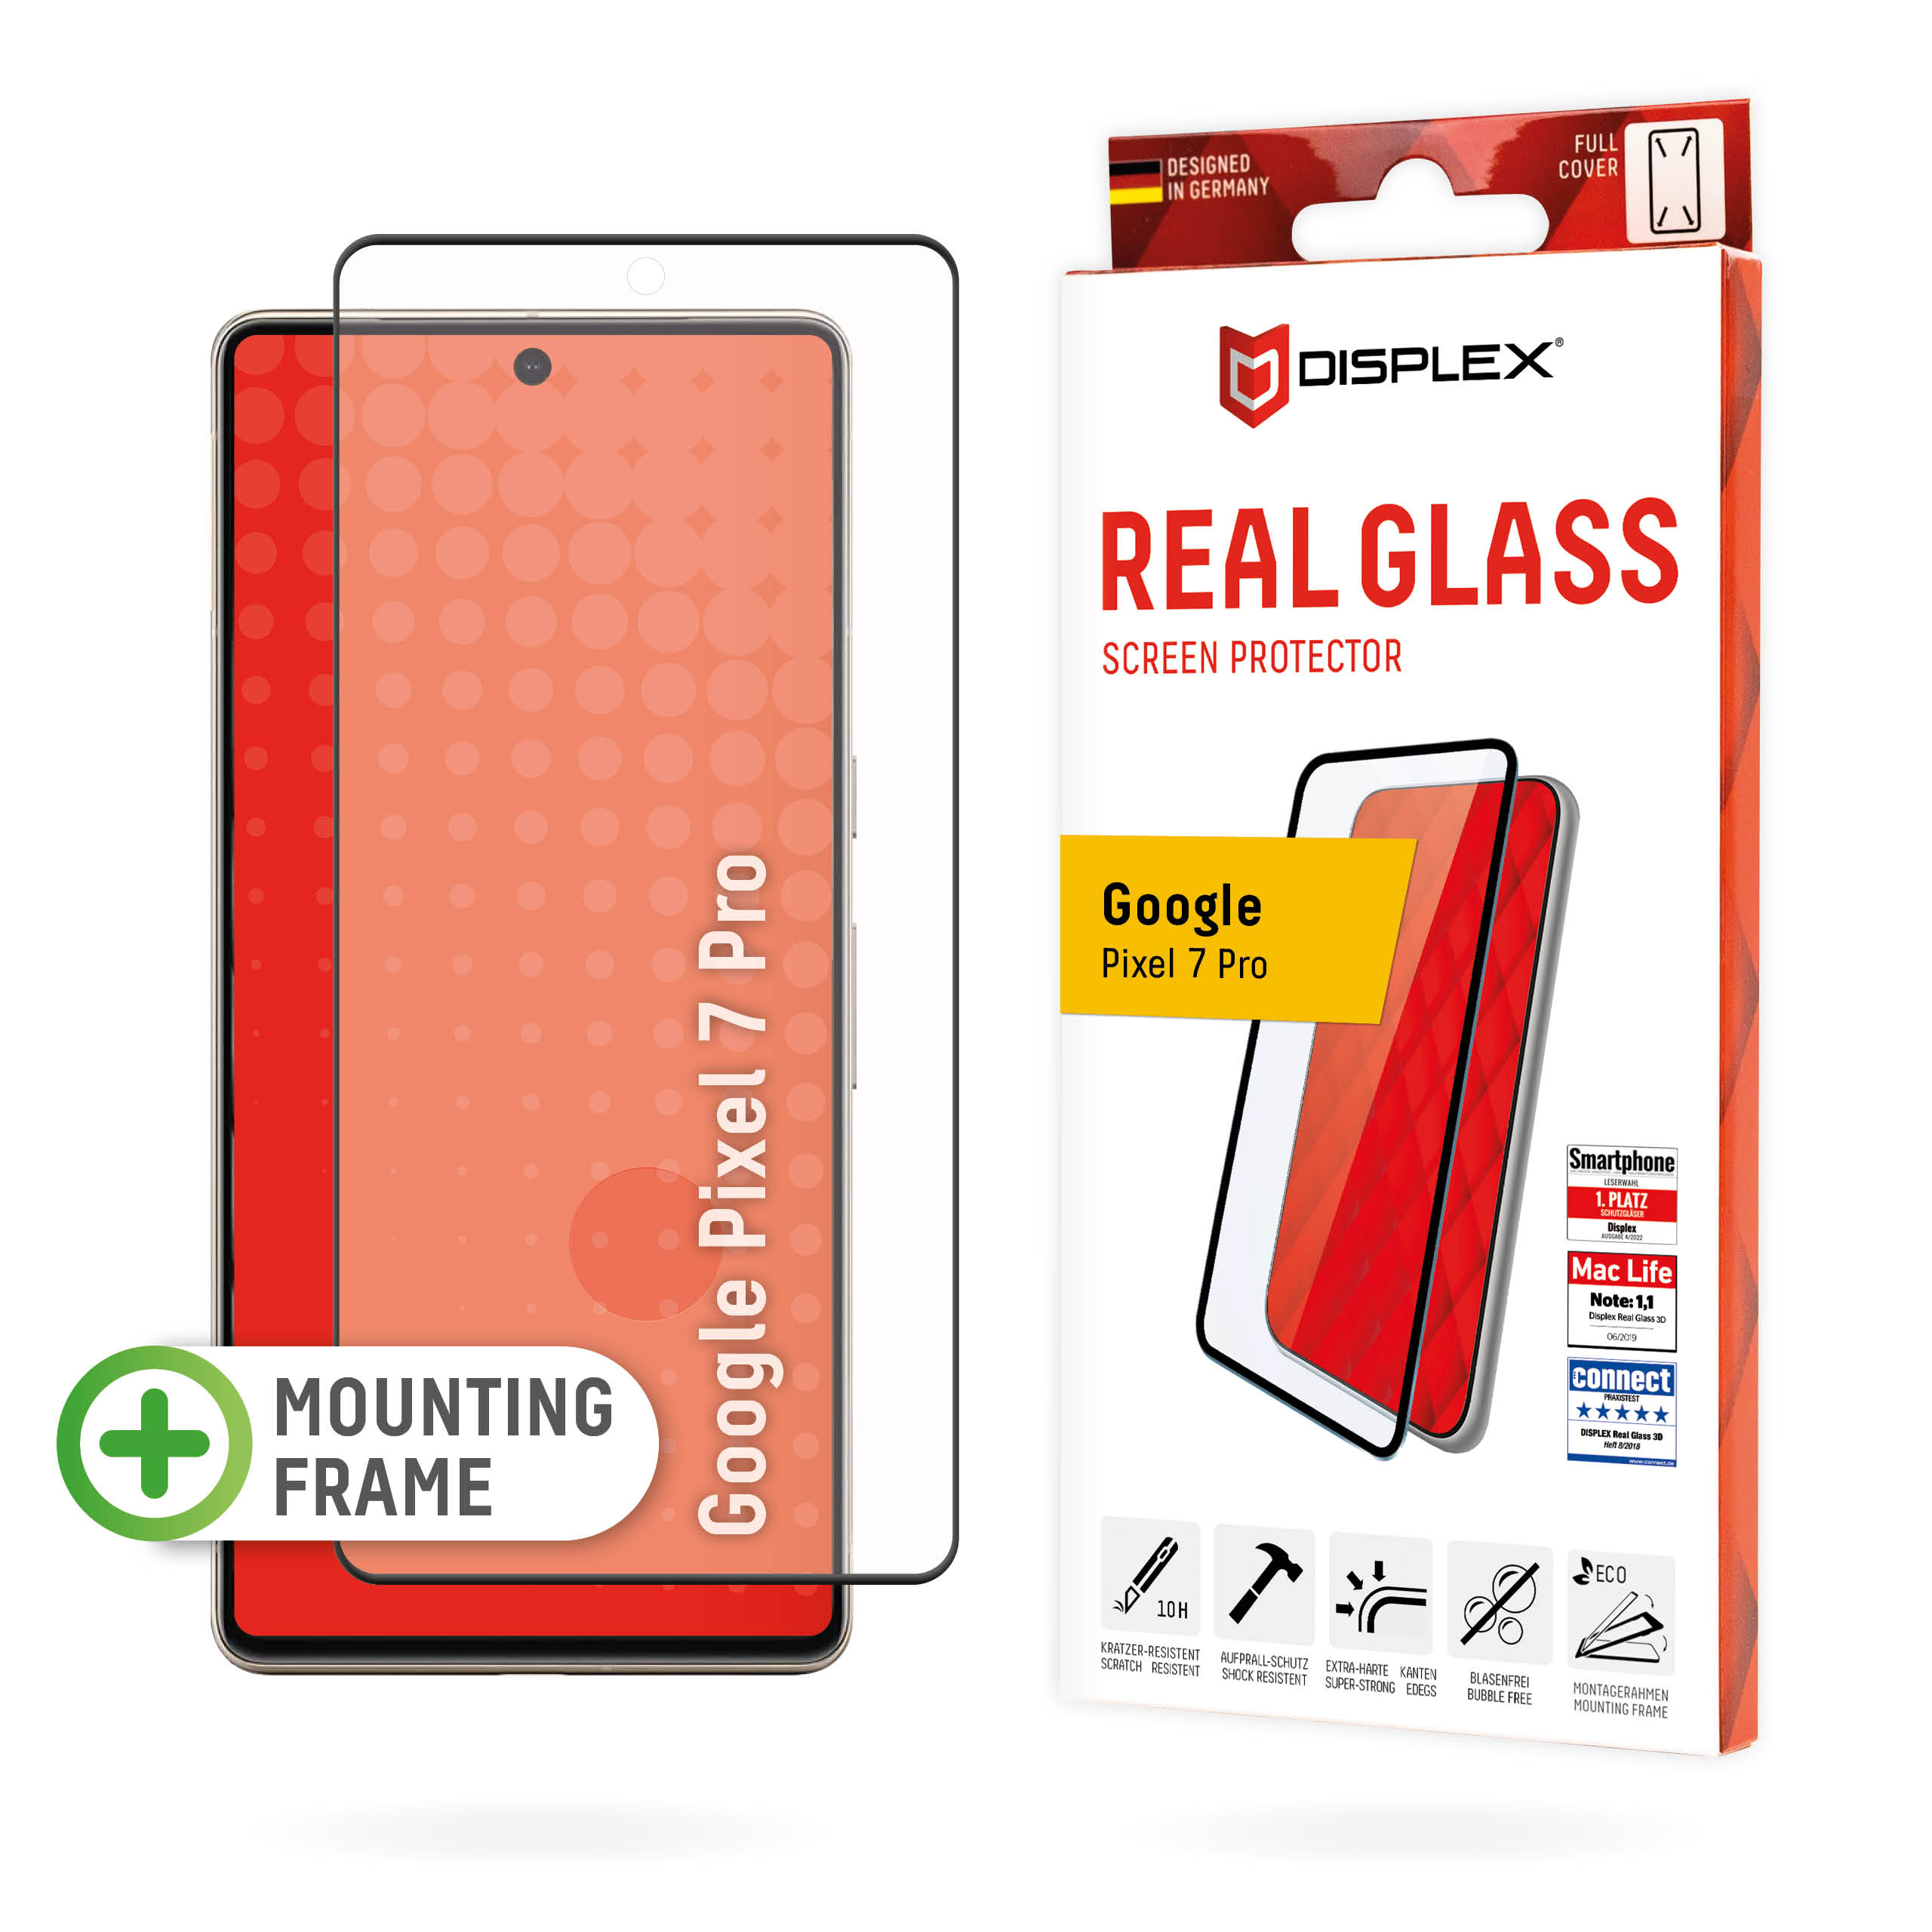 01802-Google-Pixel-7-Pro-Real-Glass-FC-3D-ENcyJZa0houqrkl